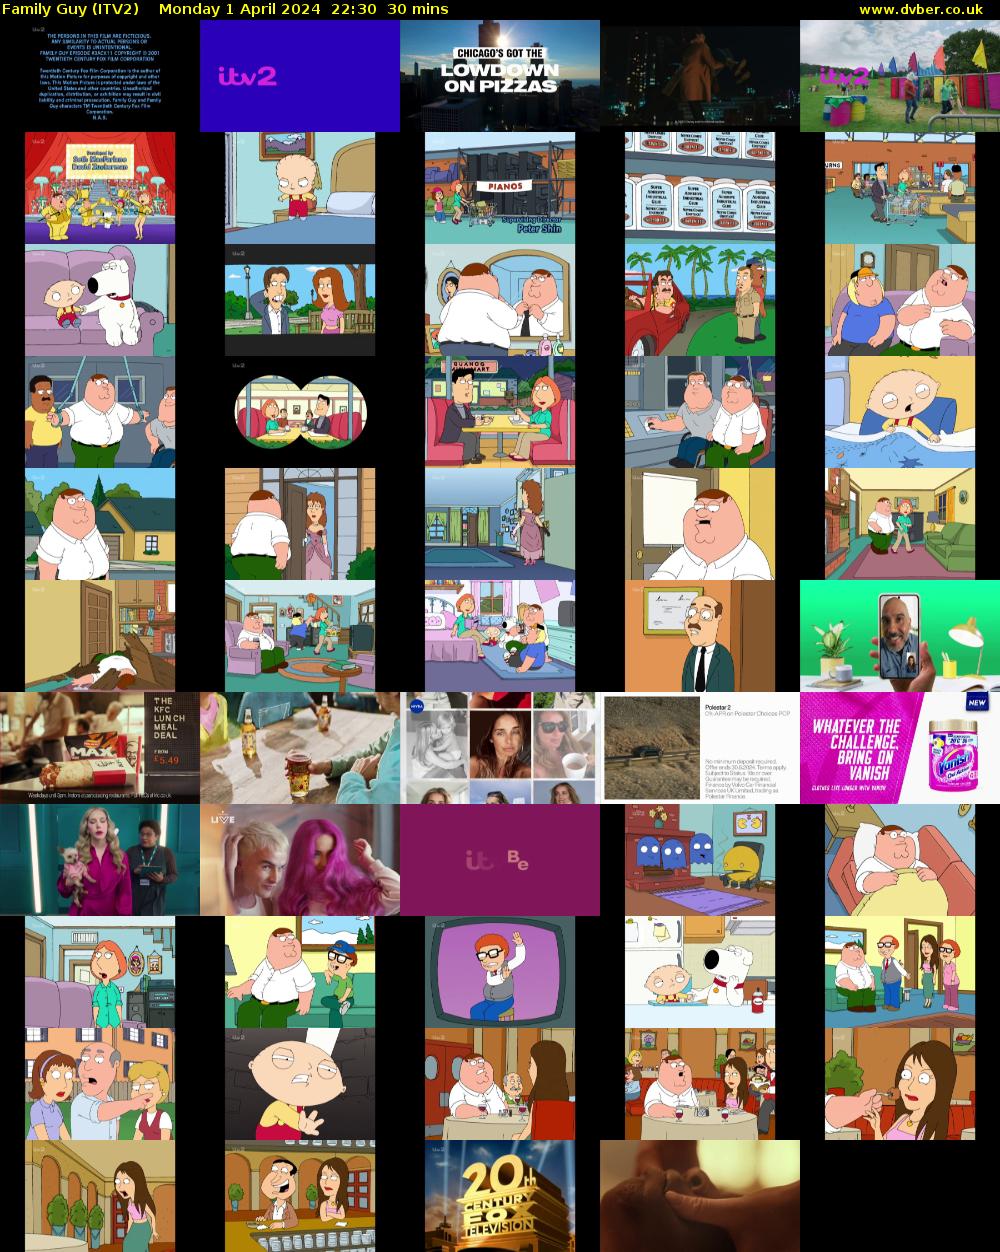 Family Guy (ITV2) Monday 1 April 2024 22:30 - 23:00